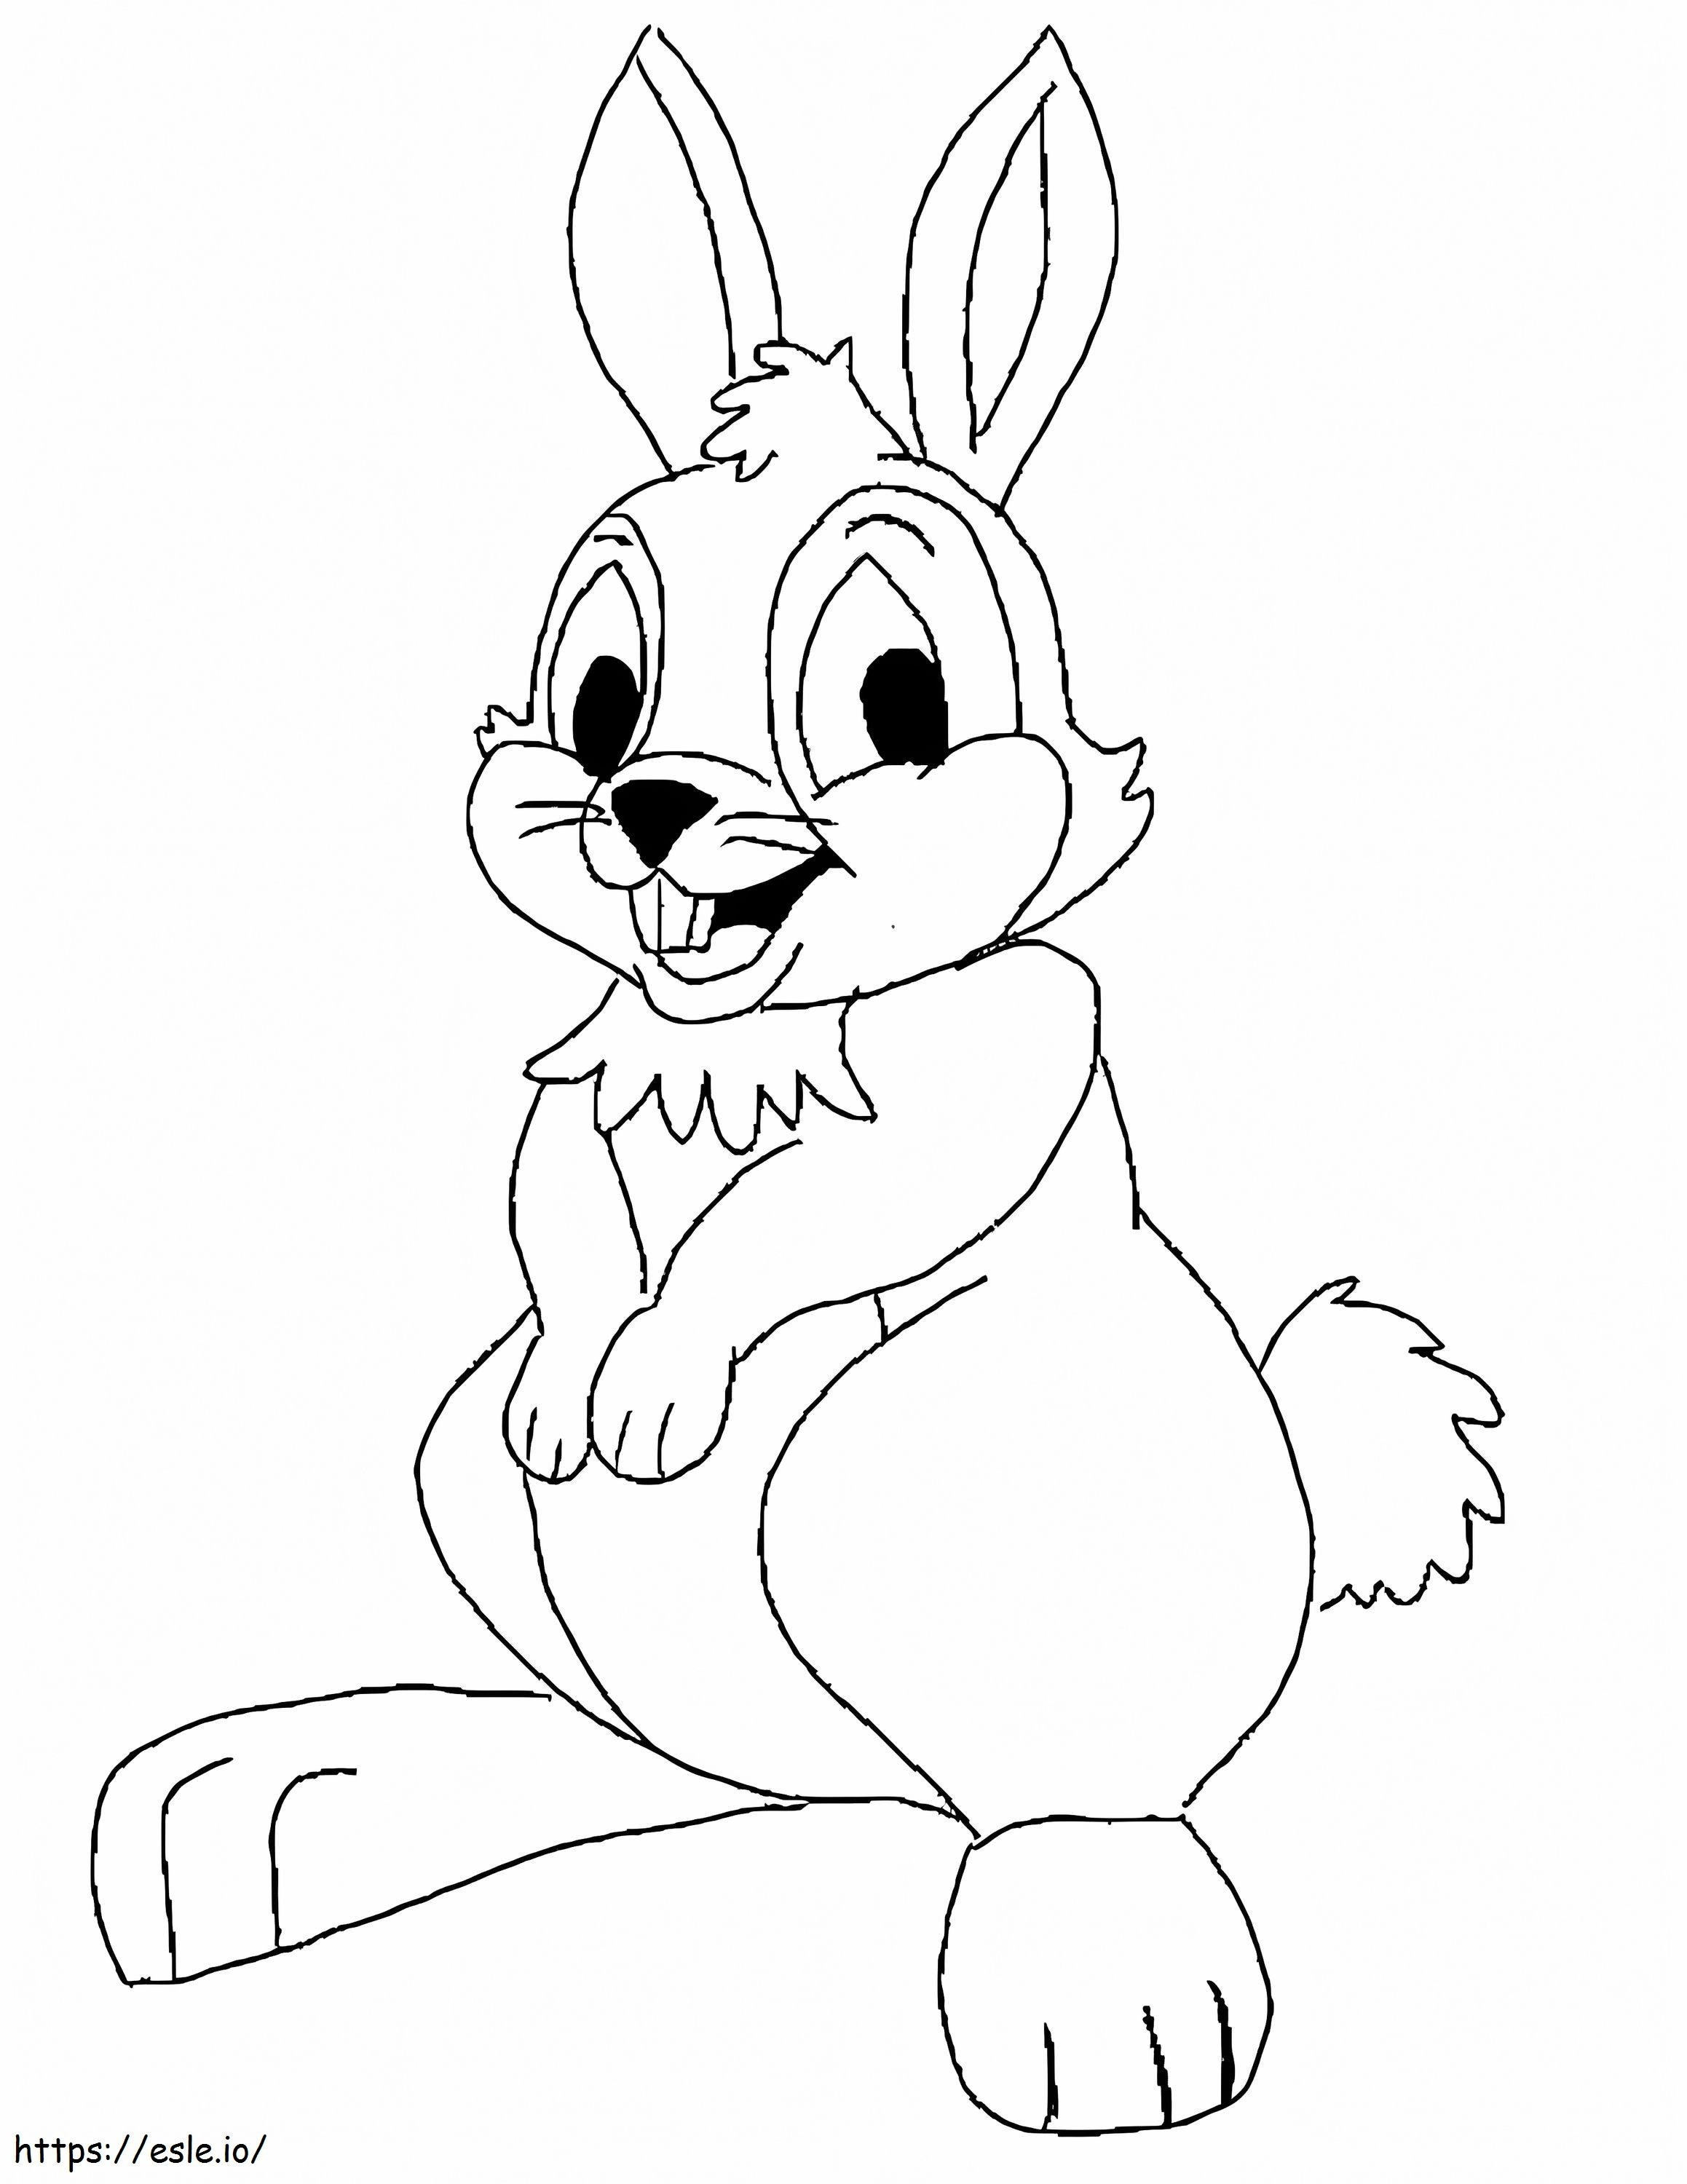 Cartoon Rabbit Smiling coloring page